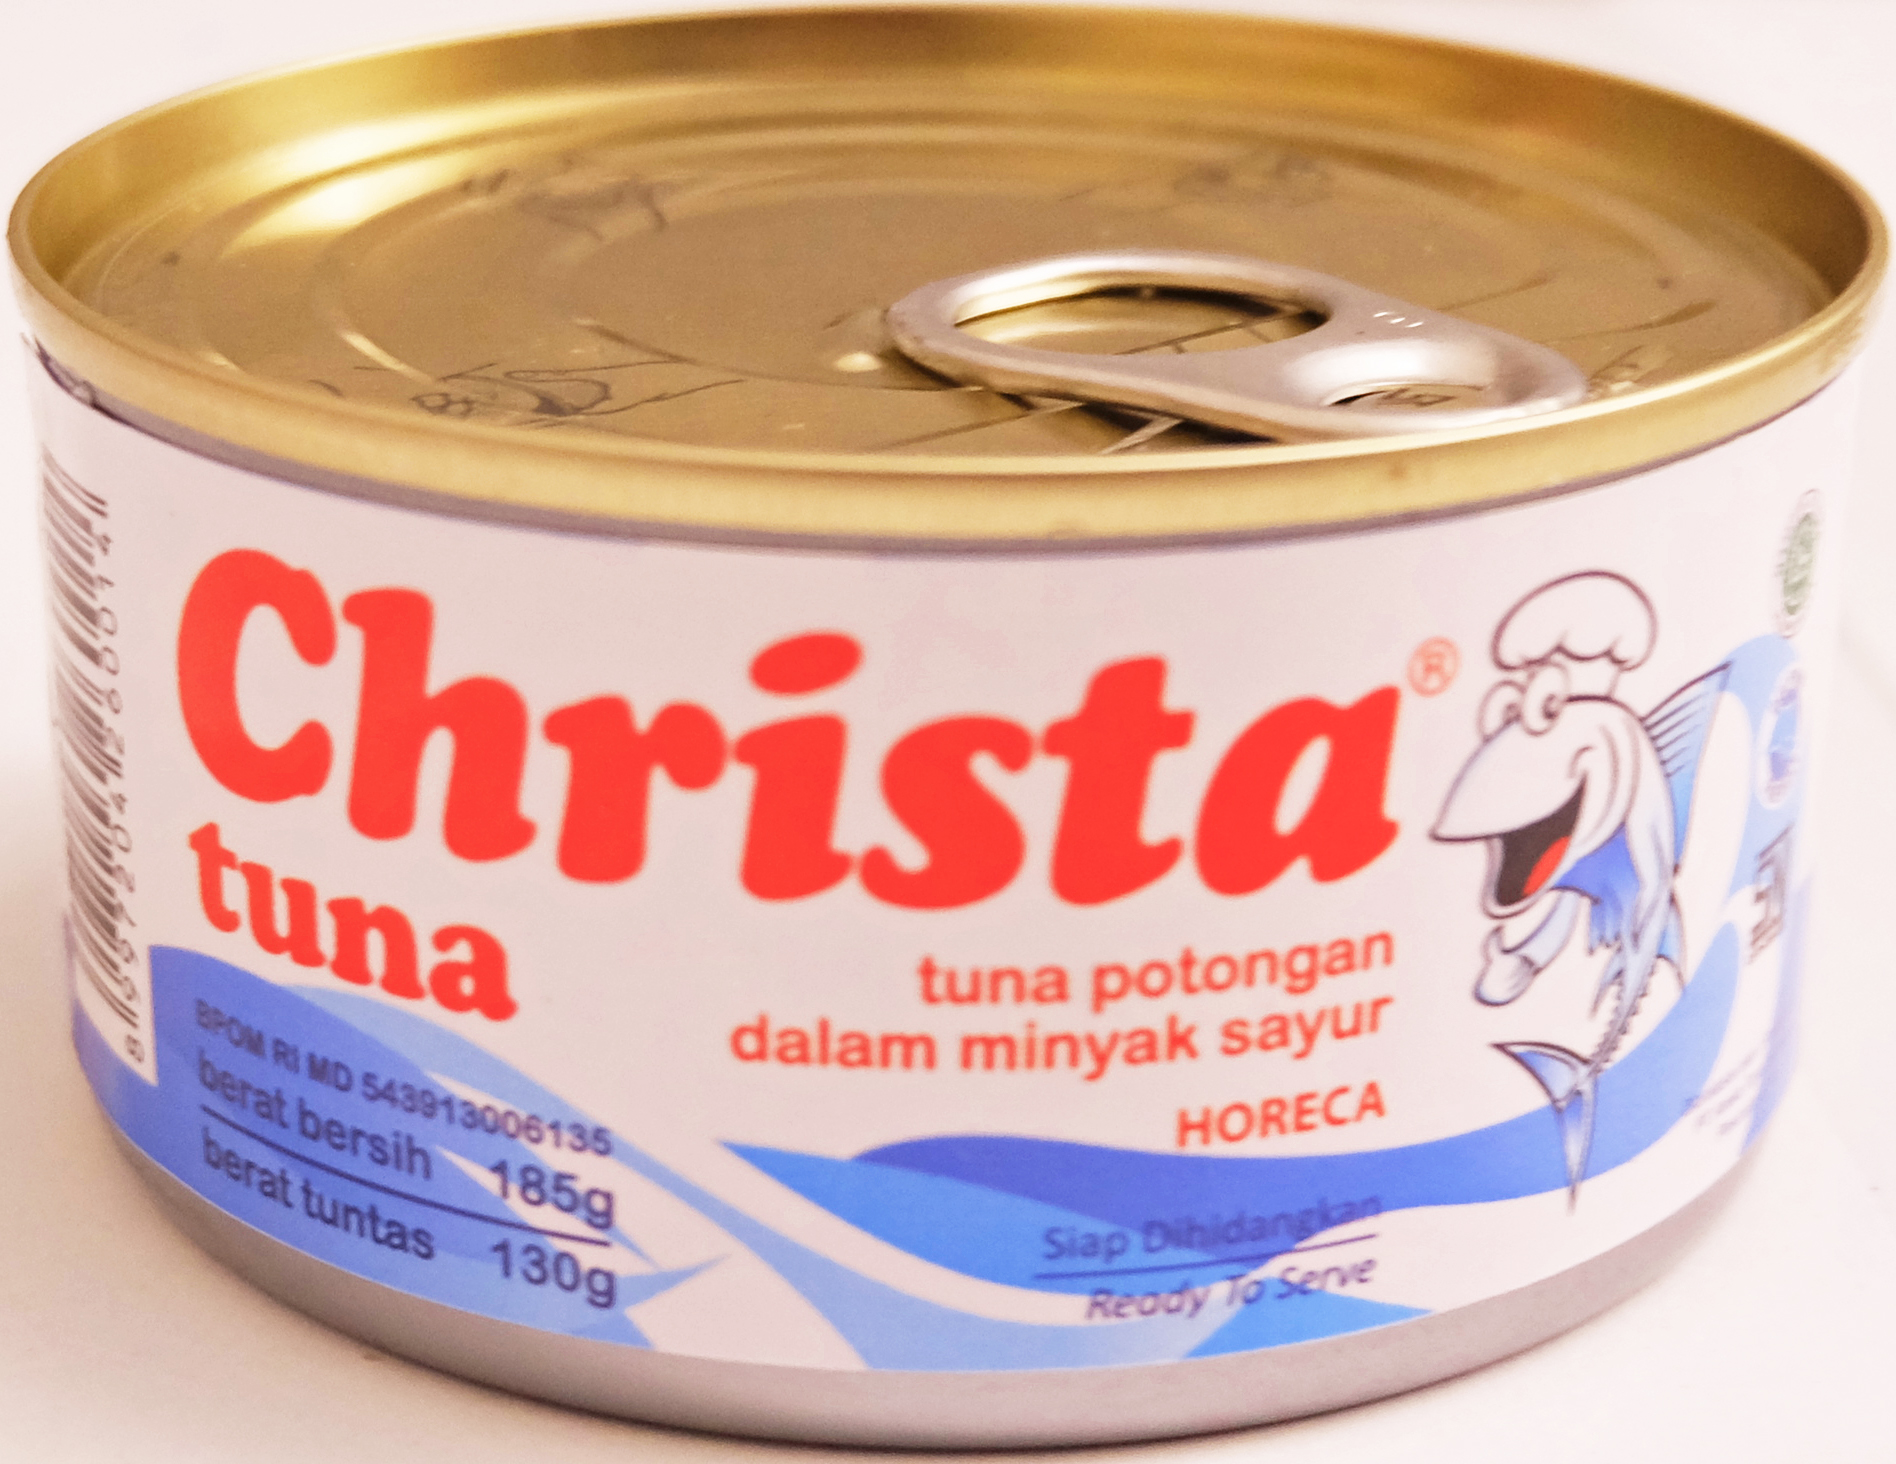 Christa Tuna kemasan Horeca 185 g